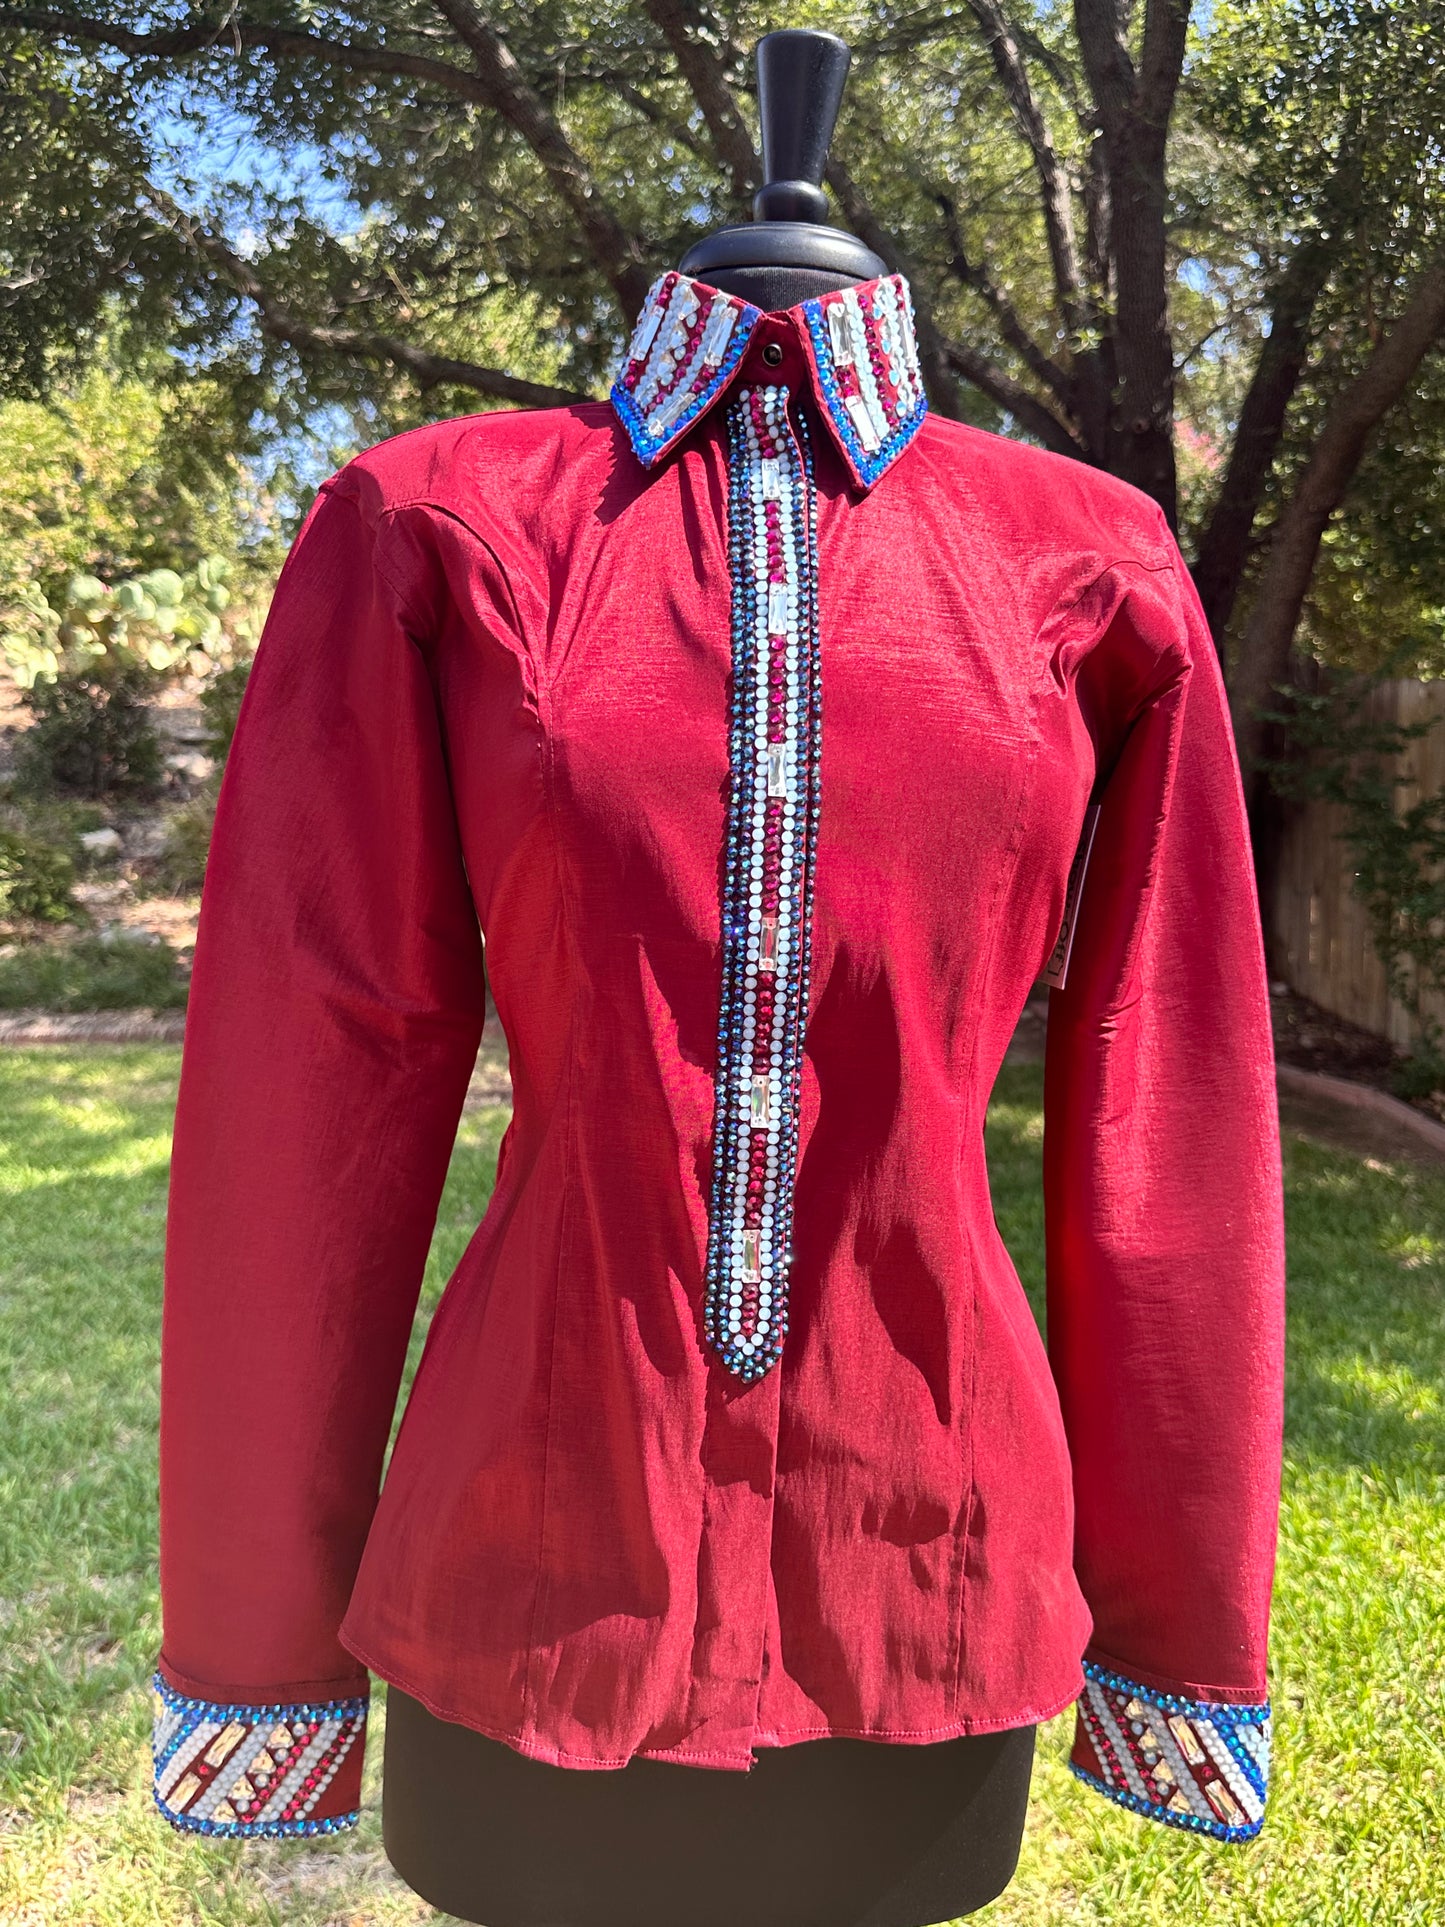 Size large day shirt burgundy and blues hidden zipper stretch taffeta